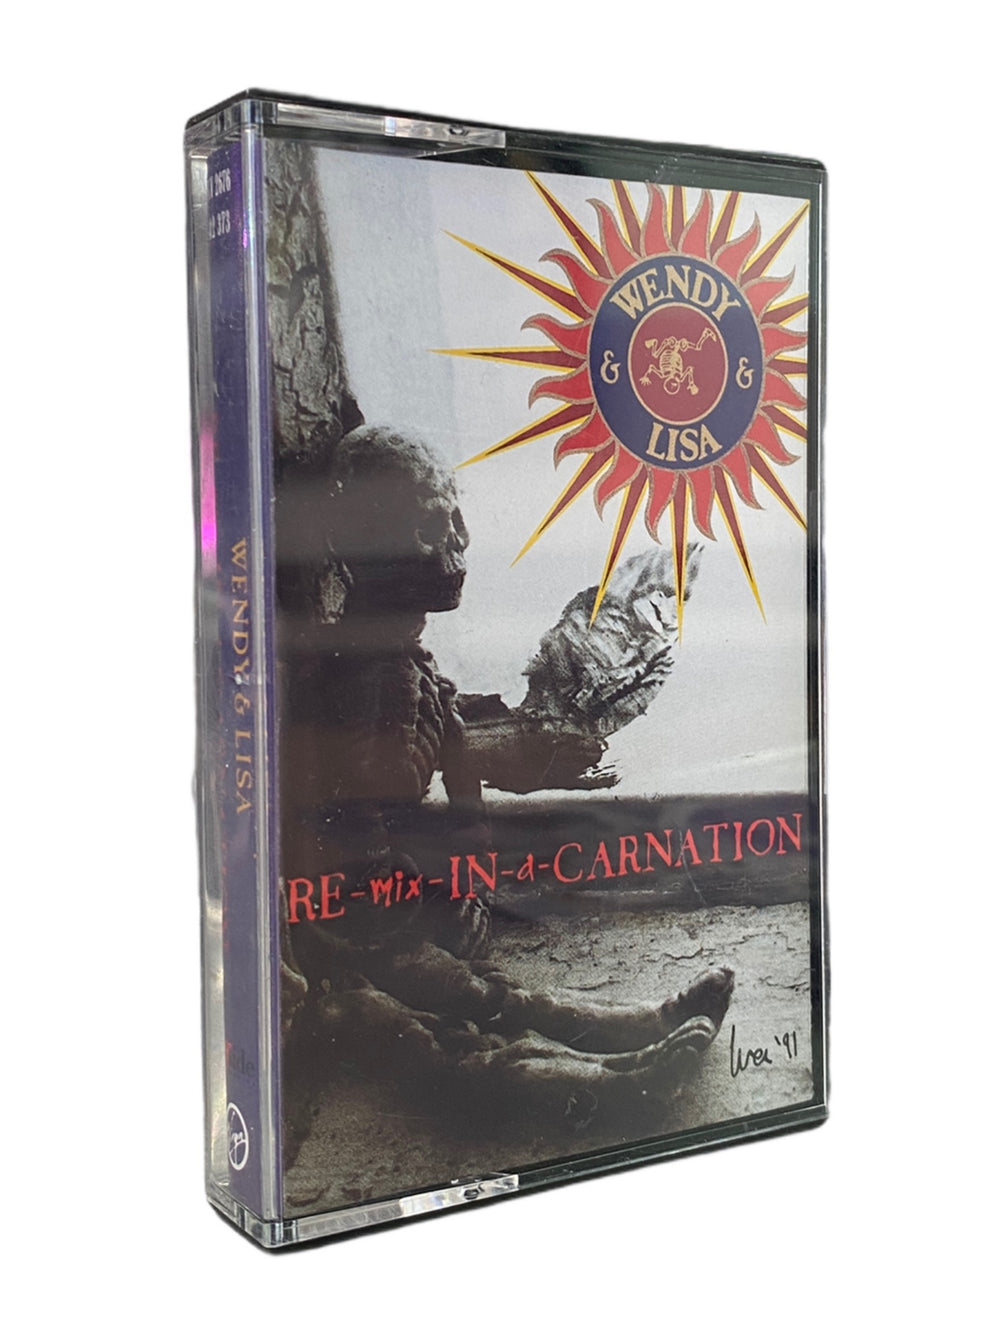 Prince – Wendy & Lisa Remix In A Carnation Cassette Album UK Preloved: 1991